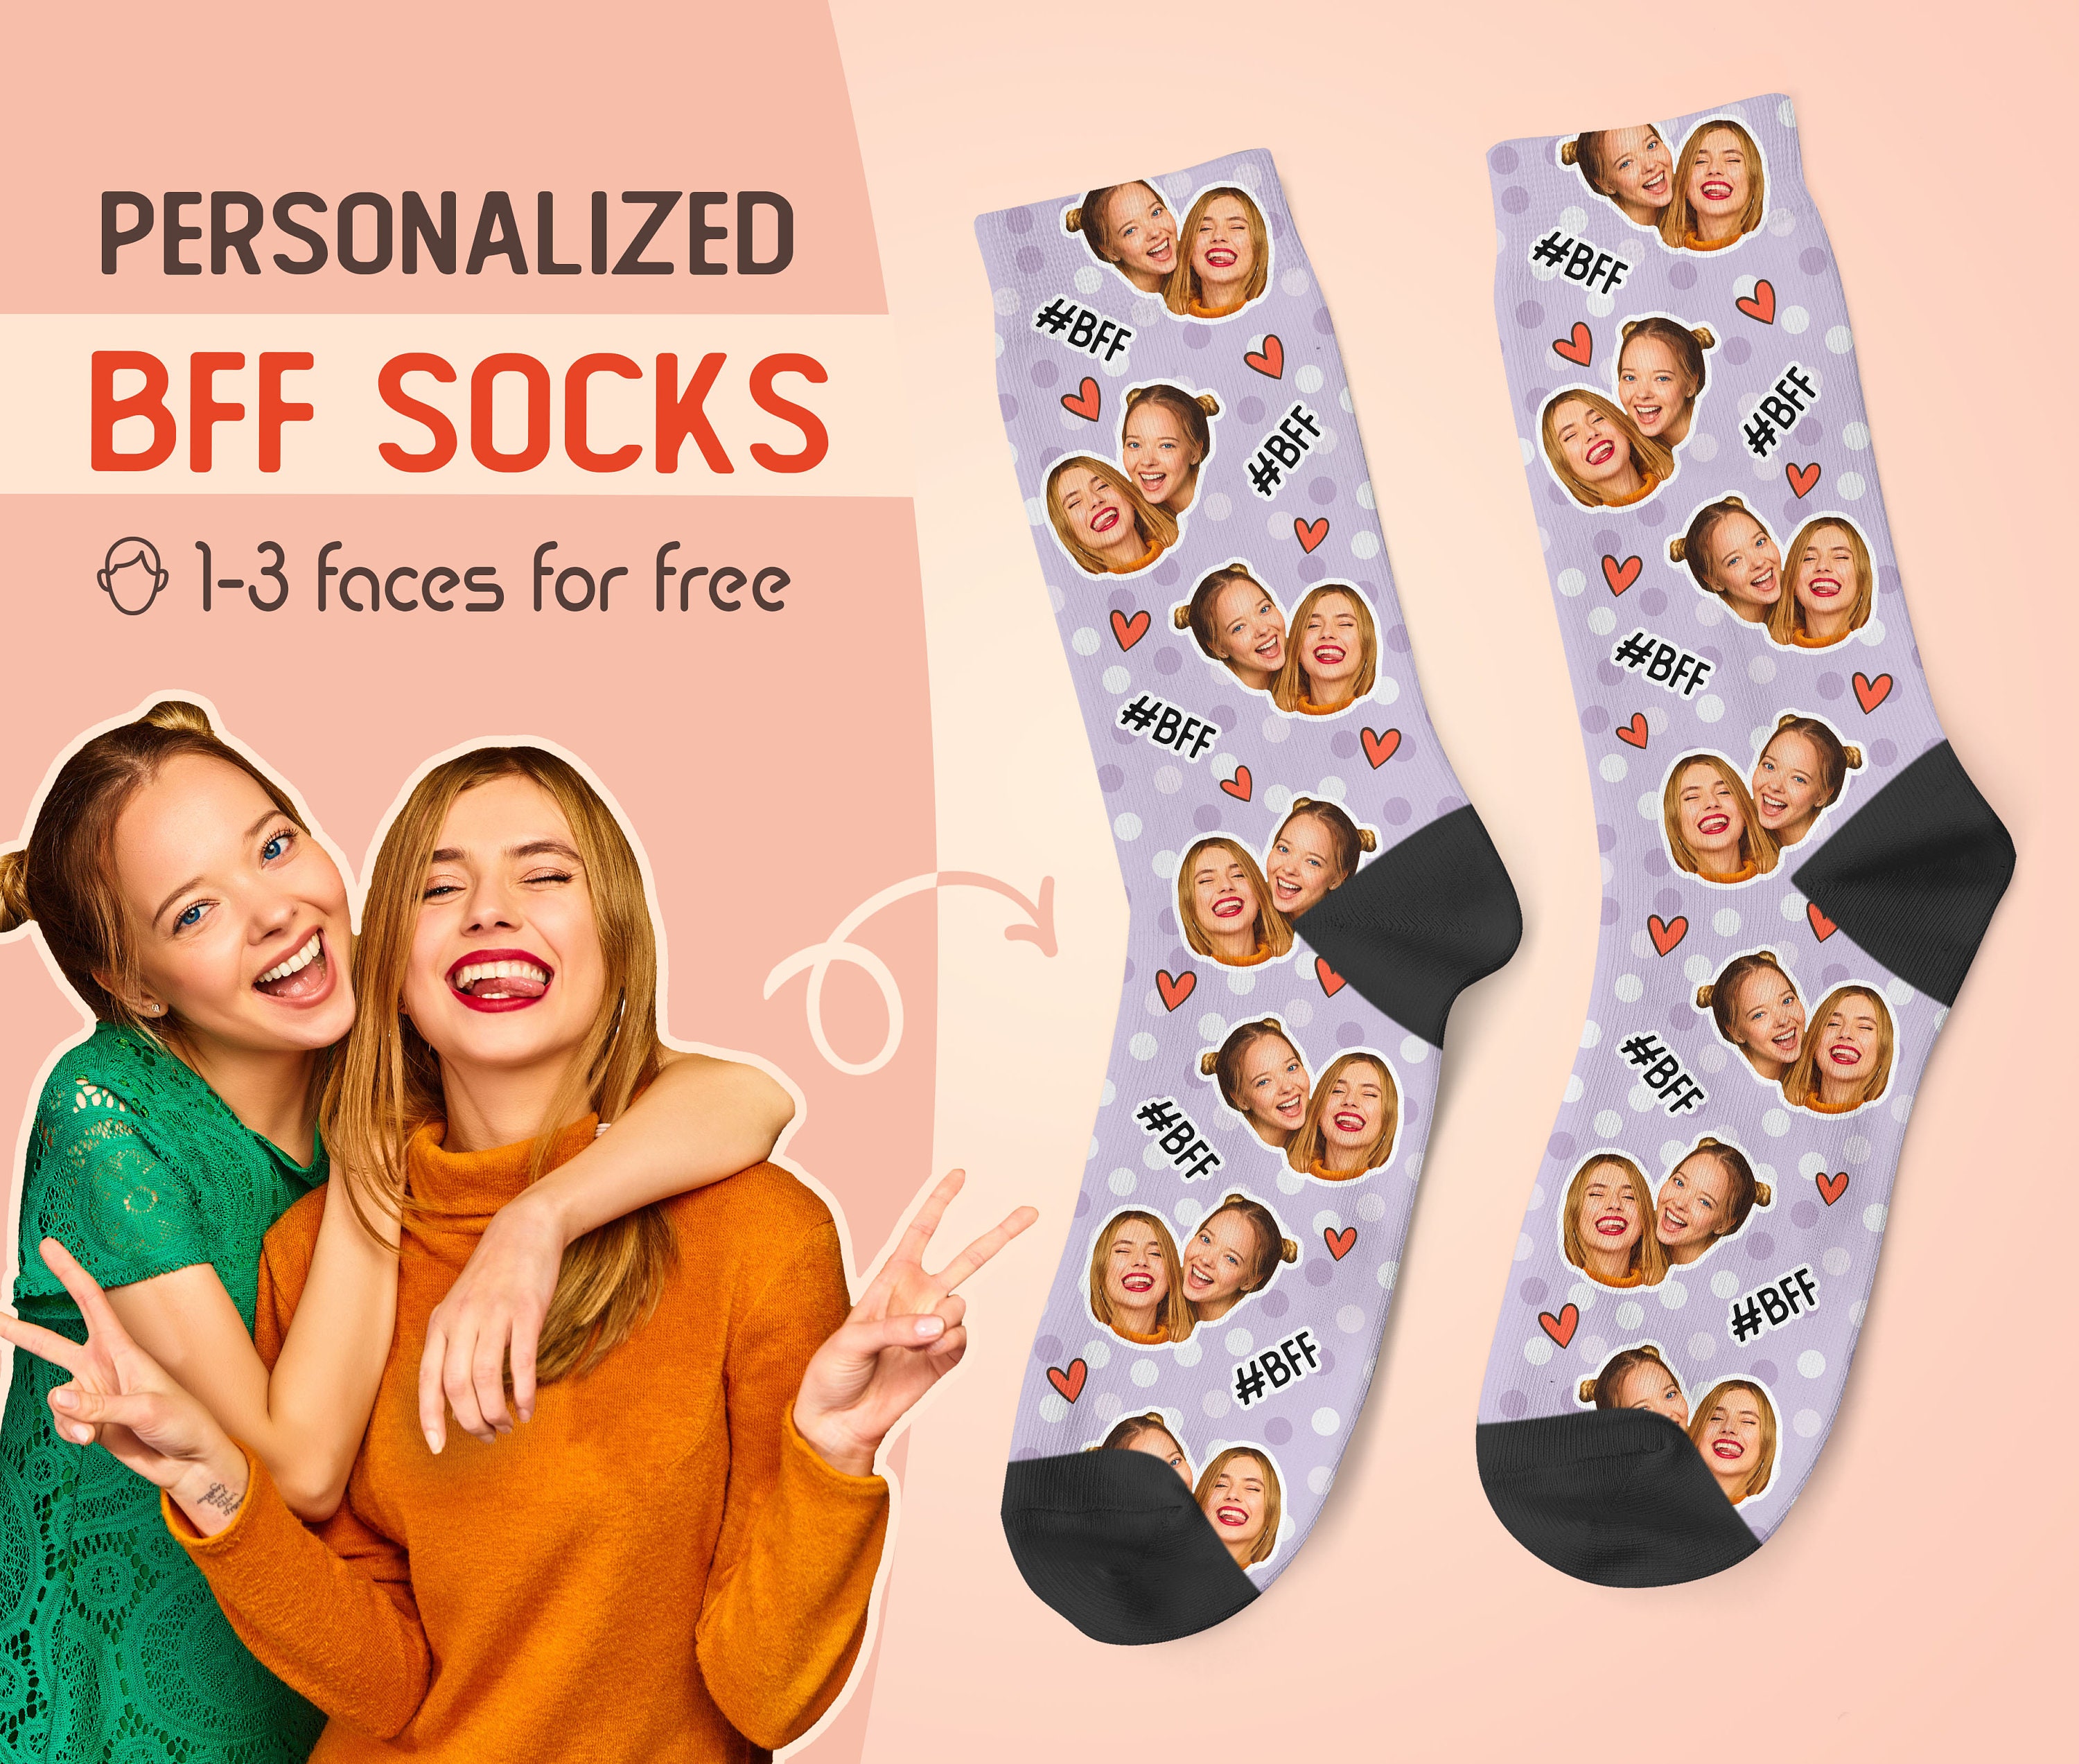 15. Personalized BFF Socks